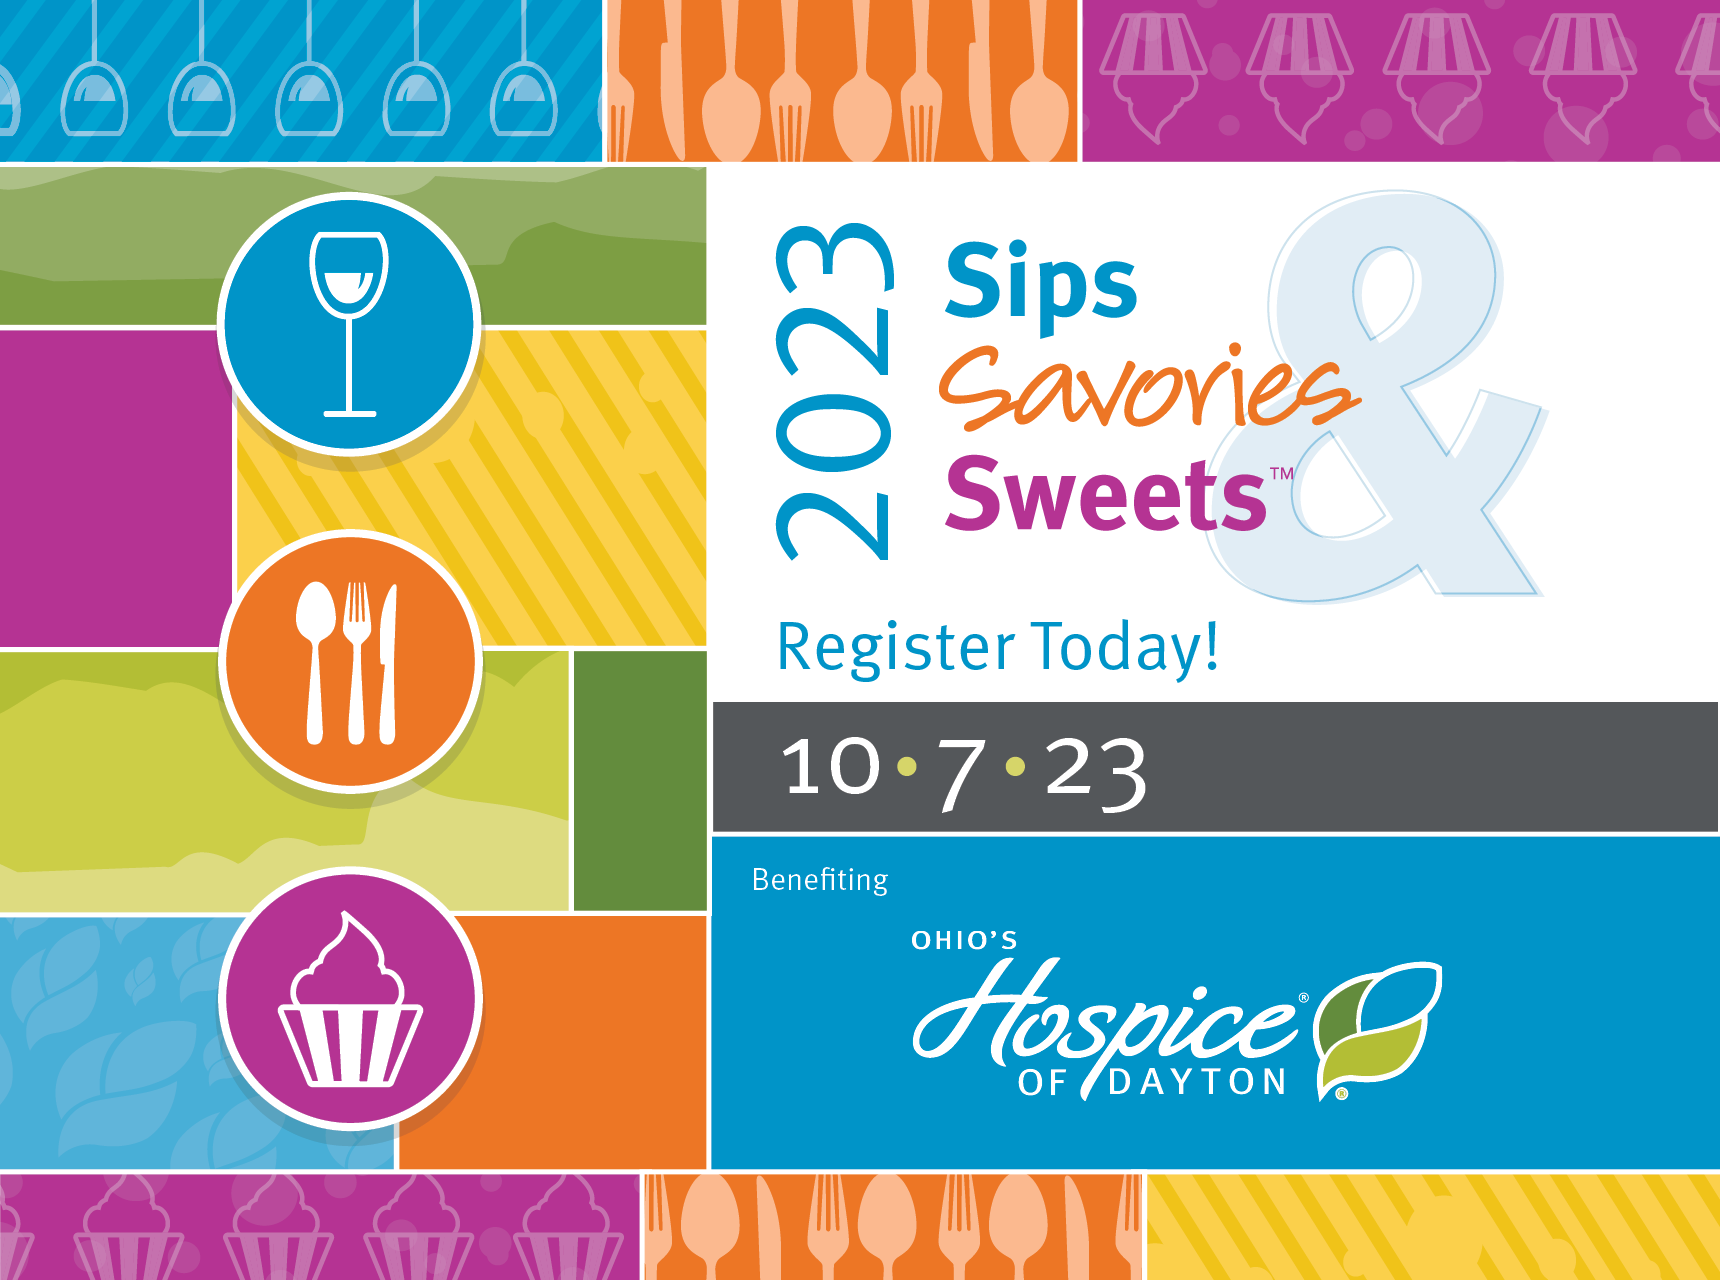 2023 Sips Savories & Sweets. 10.7.23. Ohio's Hospice of Dayton